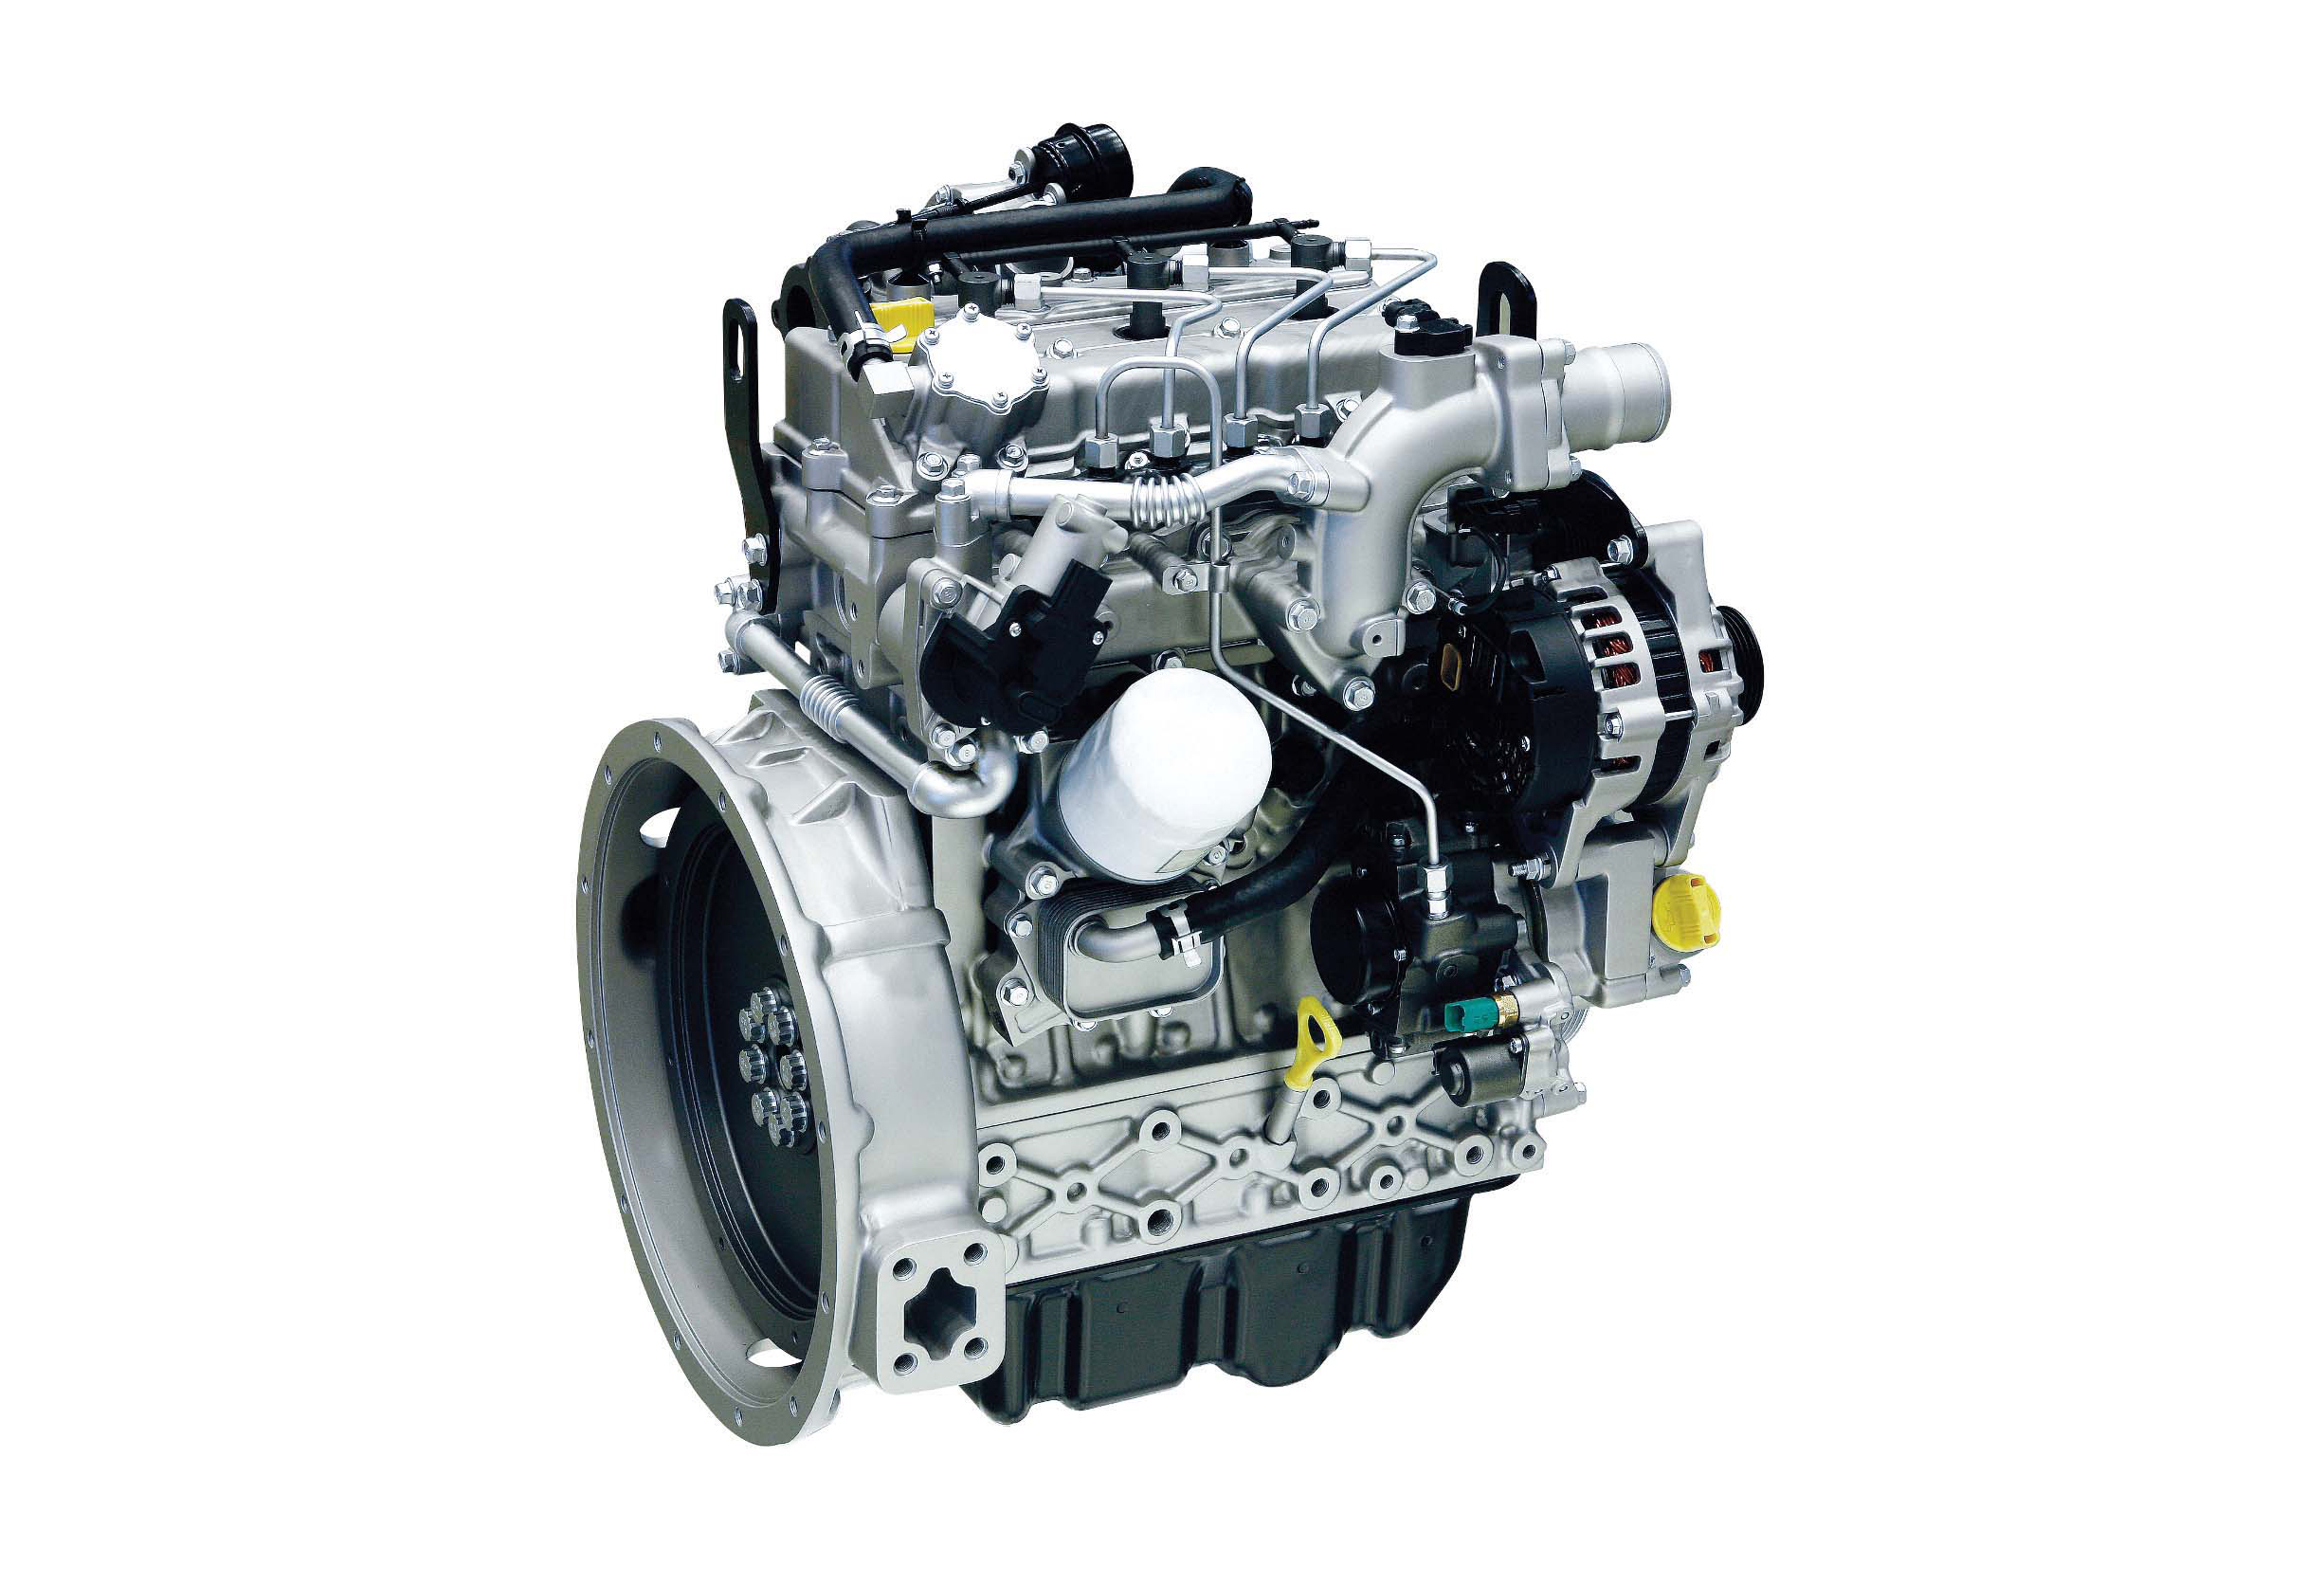 Bobcat D18 engine